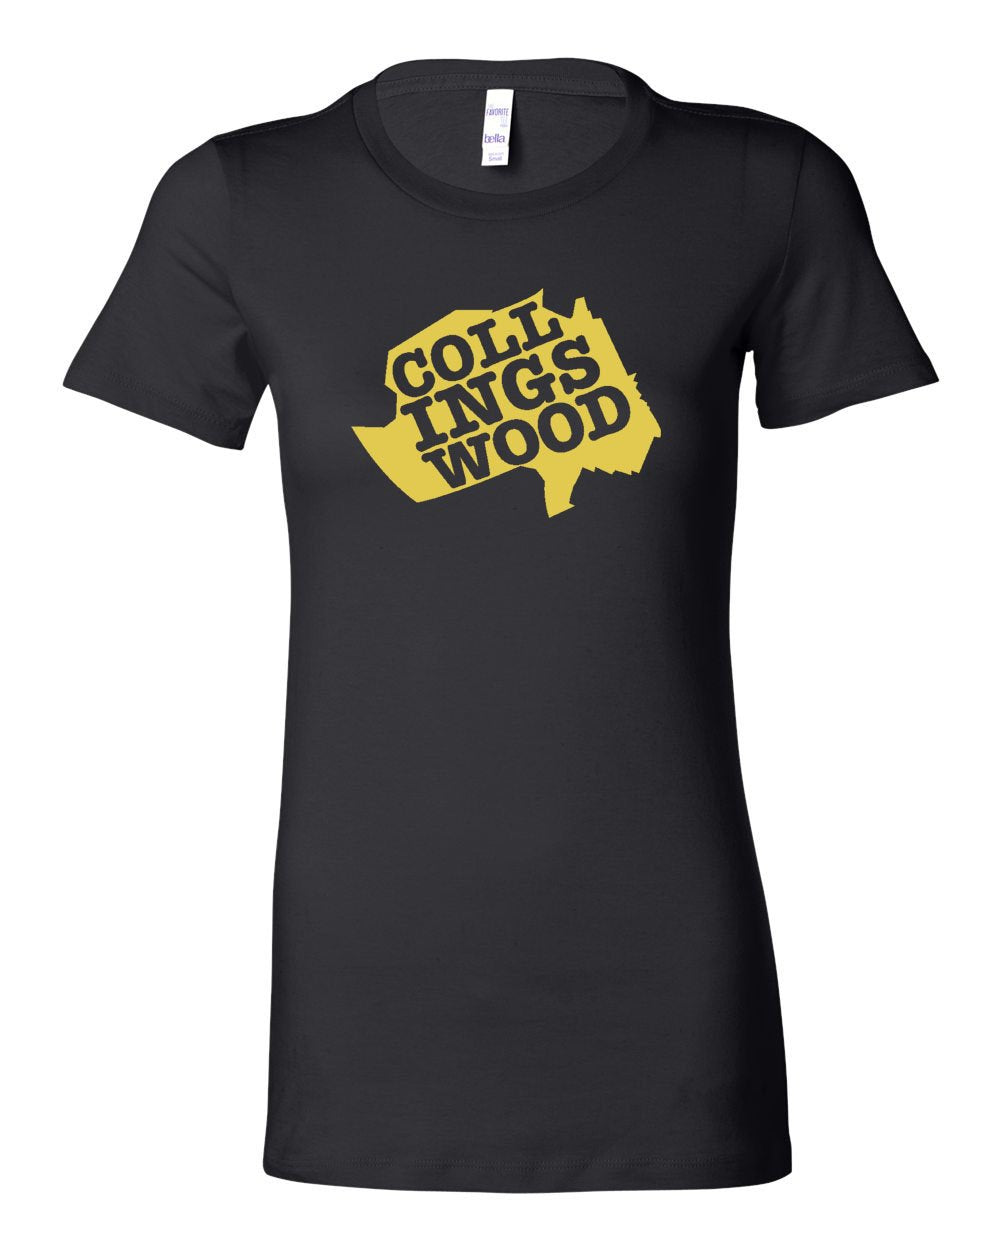 Collingswood Yellow Logo LADIES Junior-Fit T-Shirt